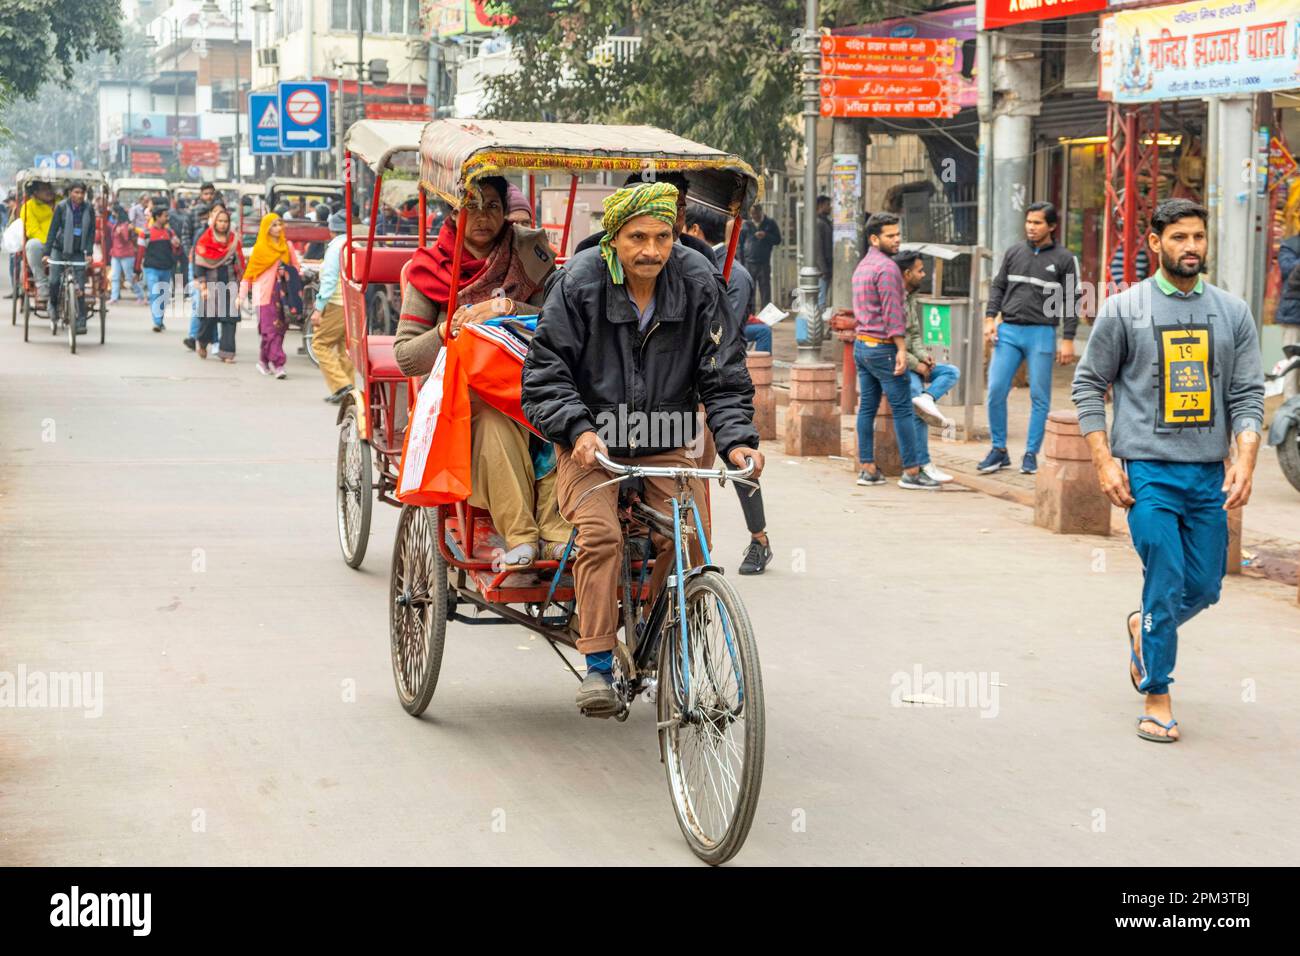 India, Delhi, Vecchia Delhi, bazar di Chandni Chowk Foto Stock